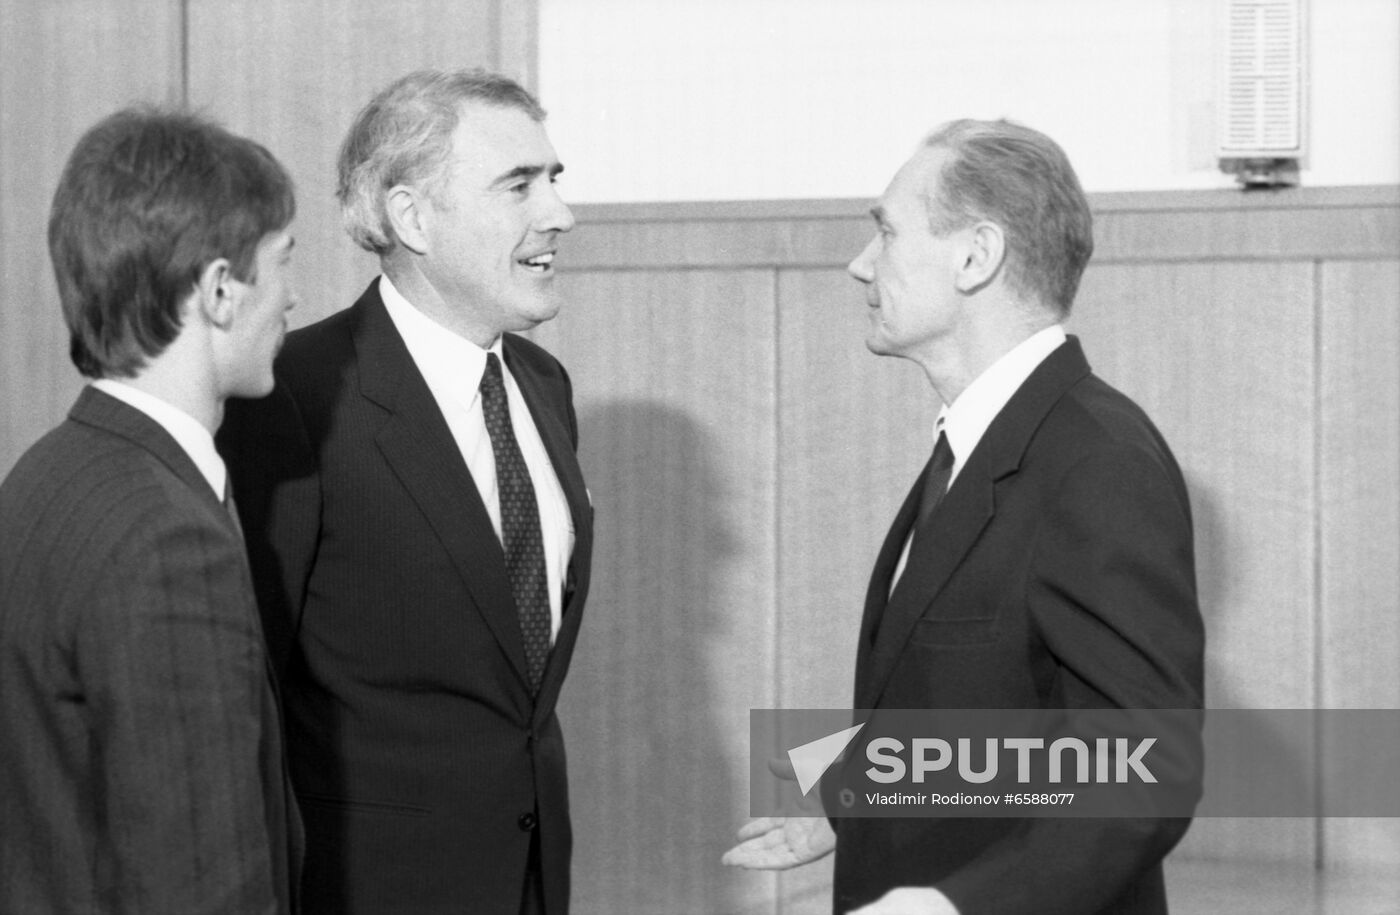 Deputy Prime Minister of New Zealand Geoffrey Palmer's visit to the Soviet Union